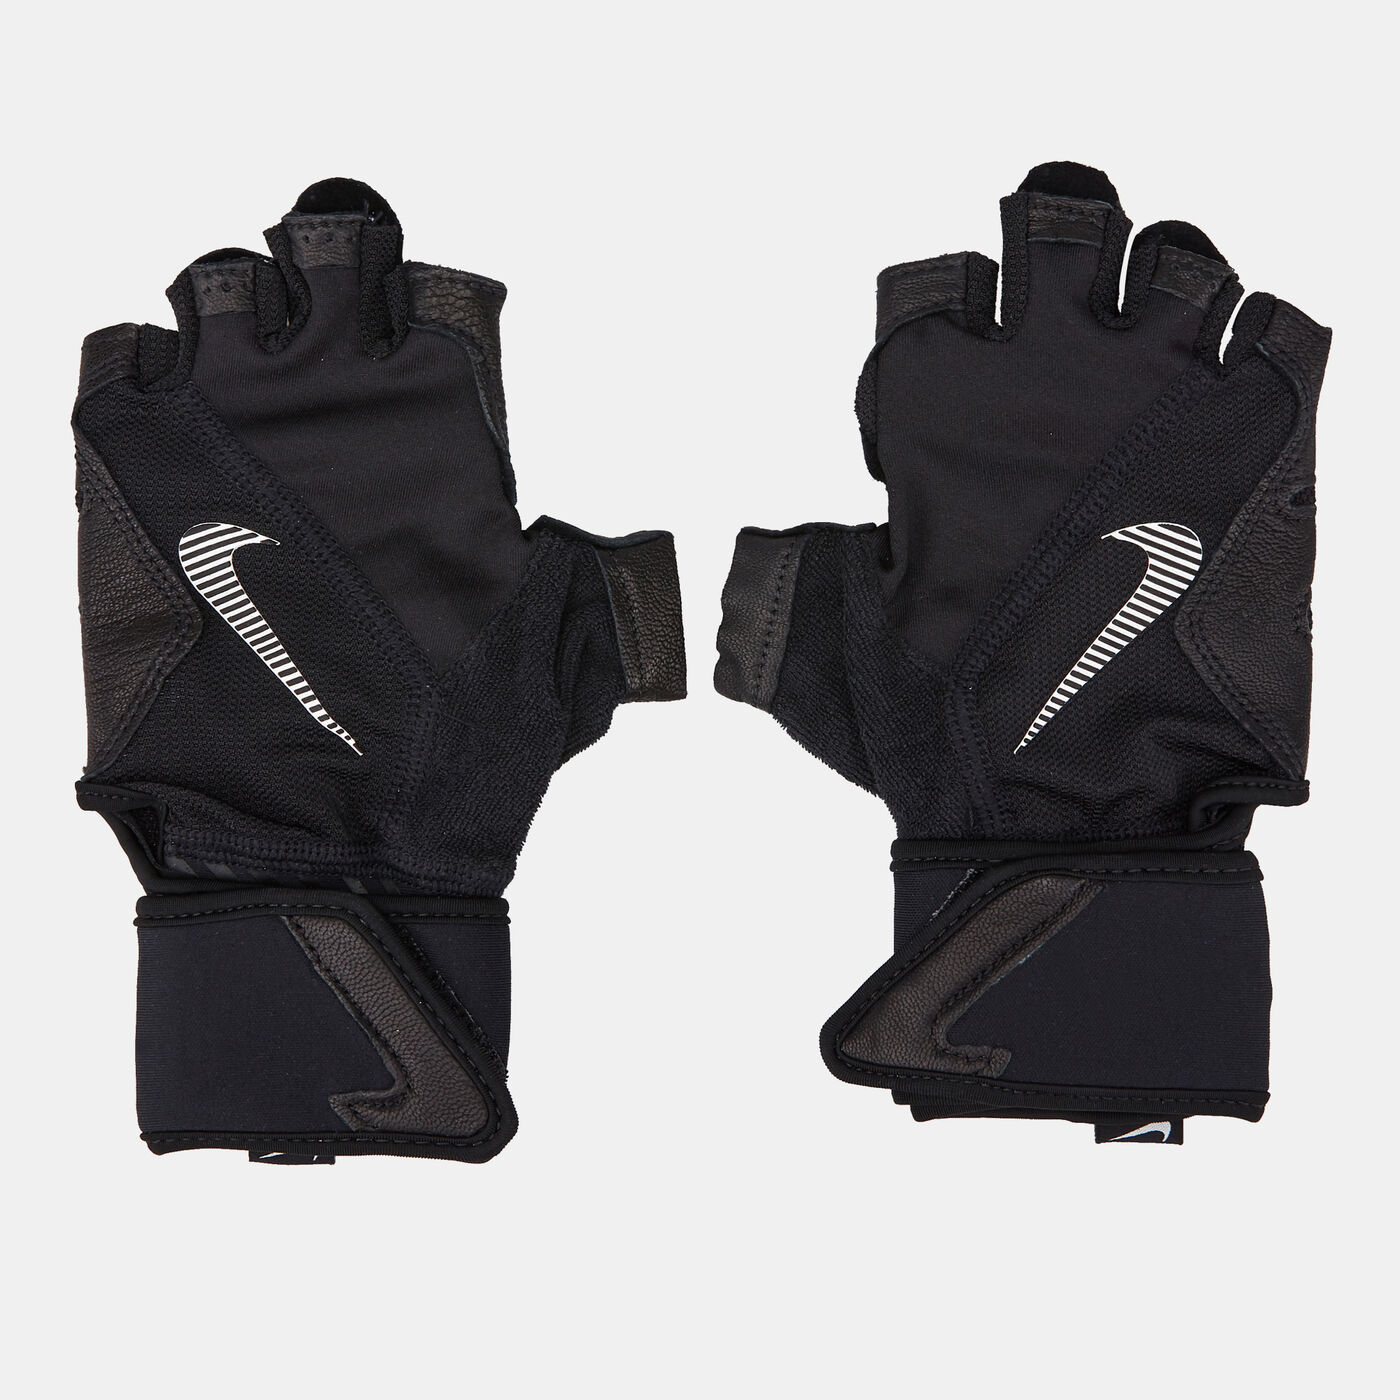 Men's Elevated Fitness Gloves